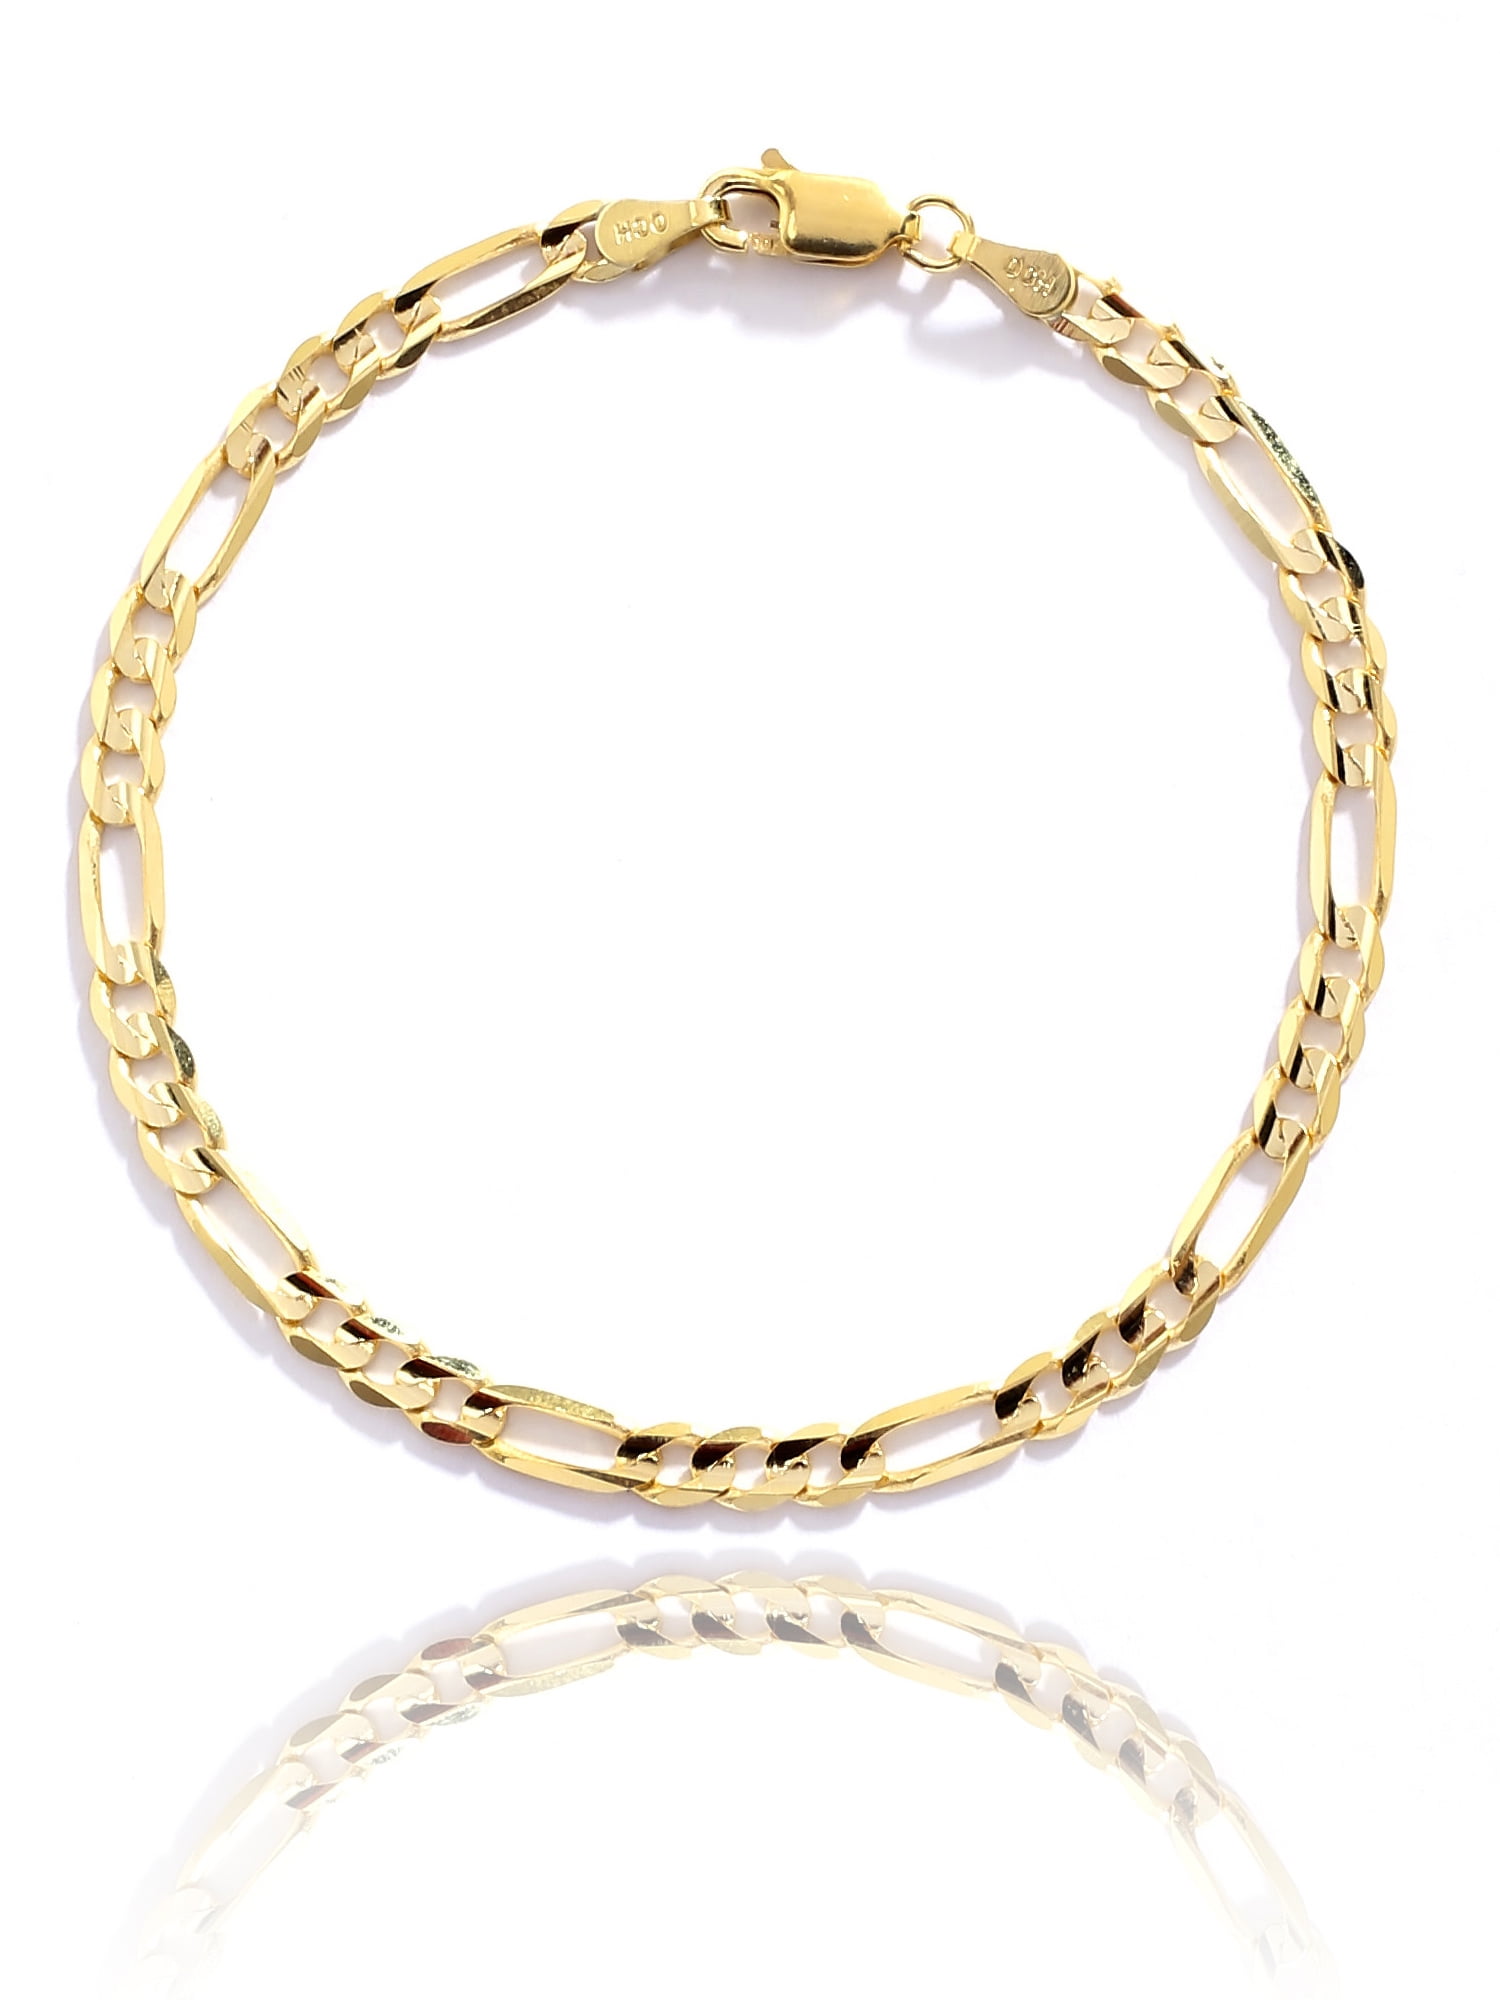 10K Real Gold Ankle Bracelet, Solid Gold Curb Link Ankle Bracelet, Everyday Gold  Jewelry, Figaro Anklet, Singapore Rope Anklet, Stamped 10K - Etsy